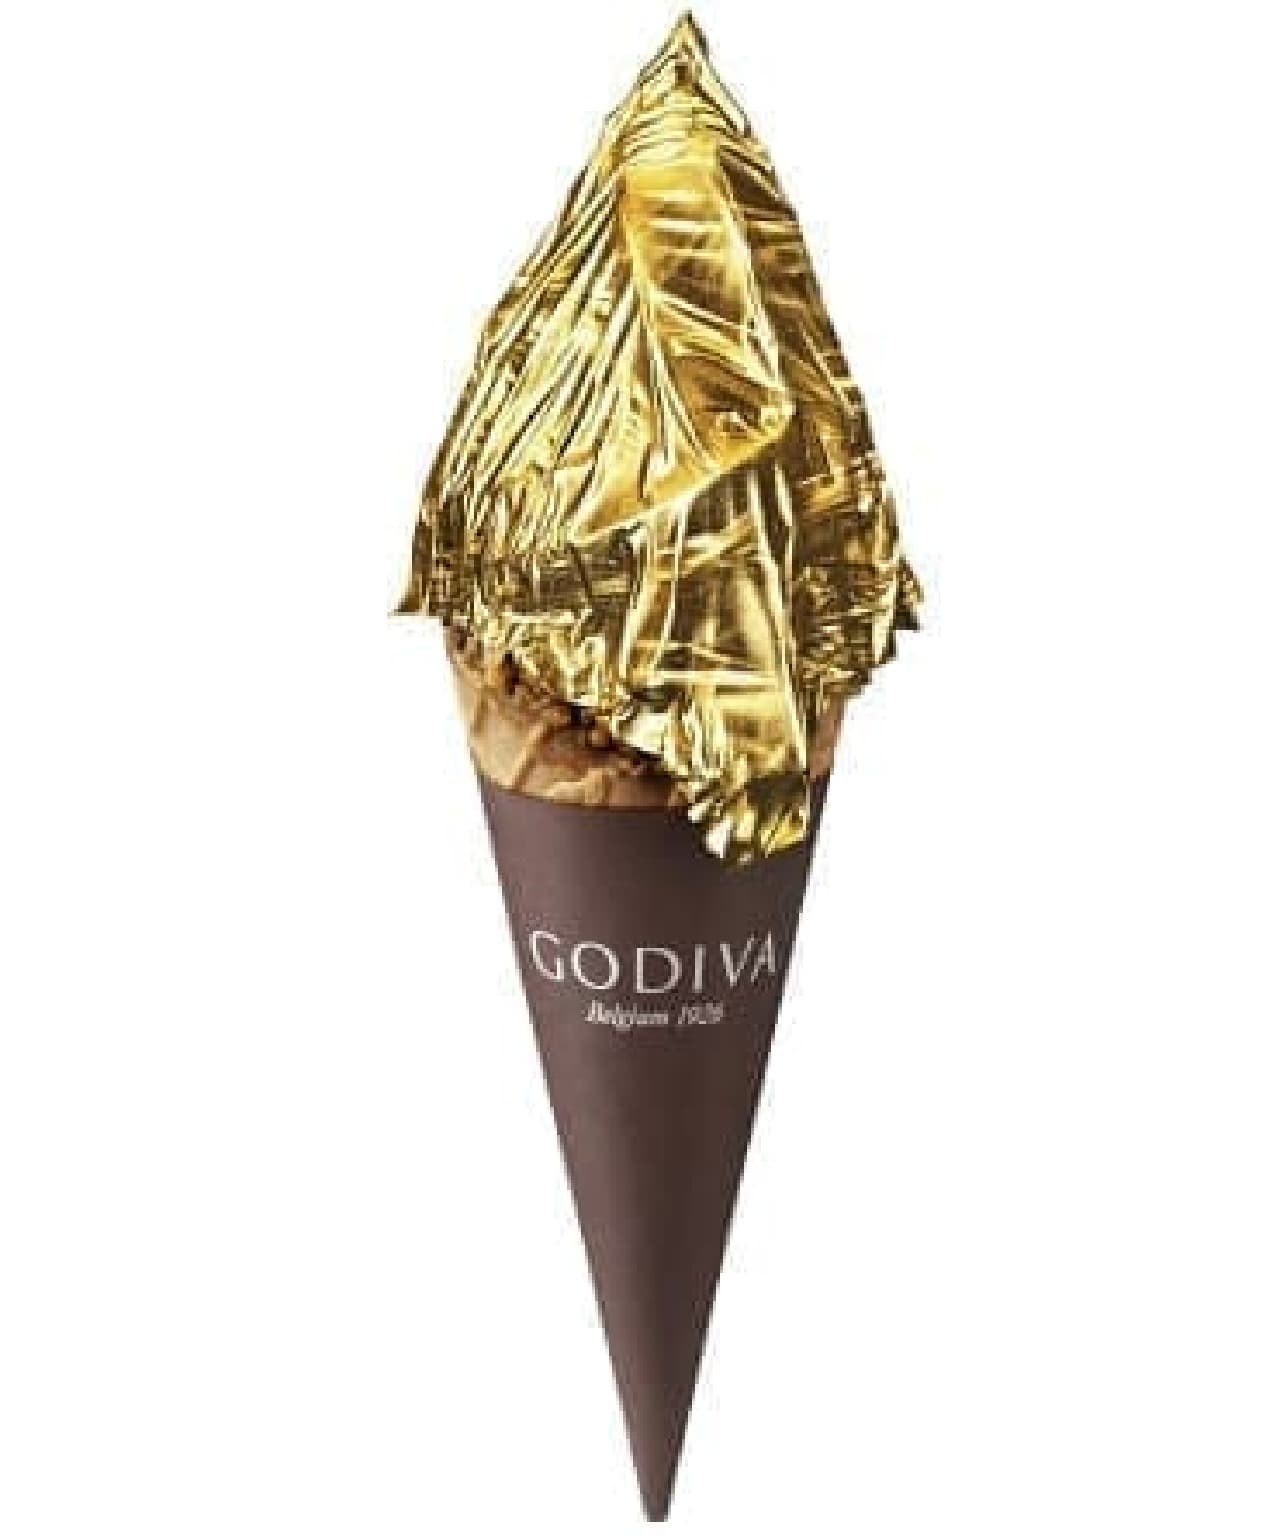 Godiva's "soft serve ice cream GOLDEN"